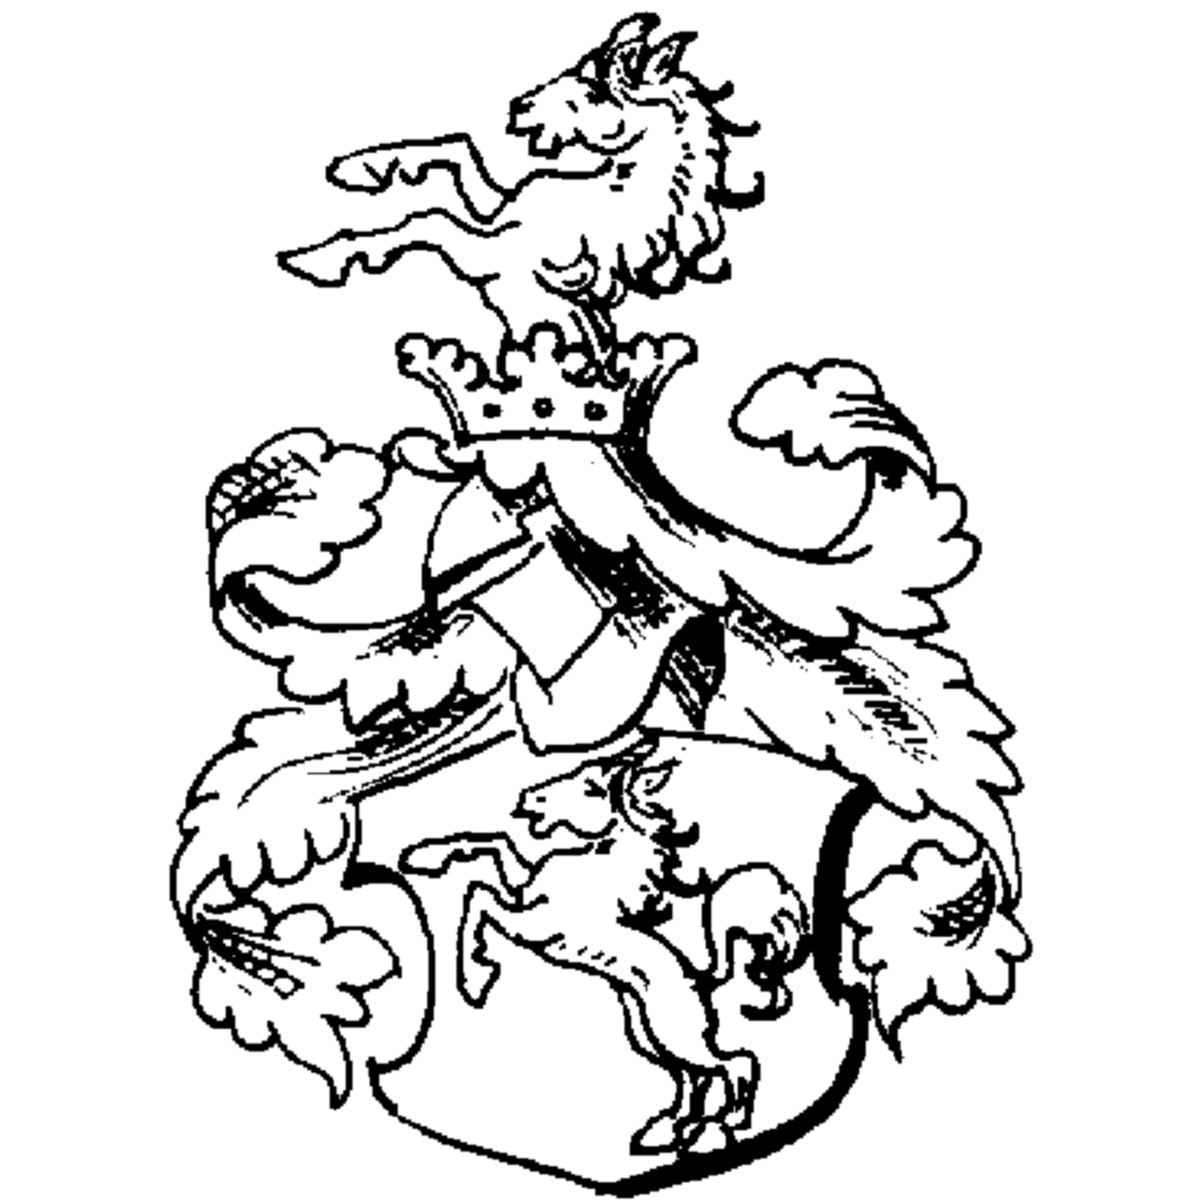 Wappen der Familie Duytze